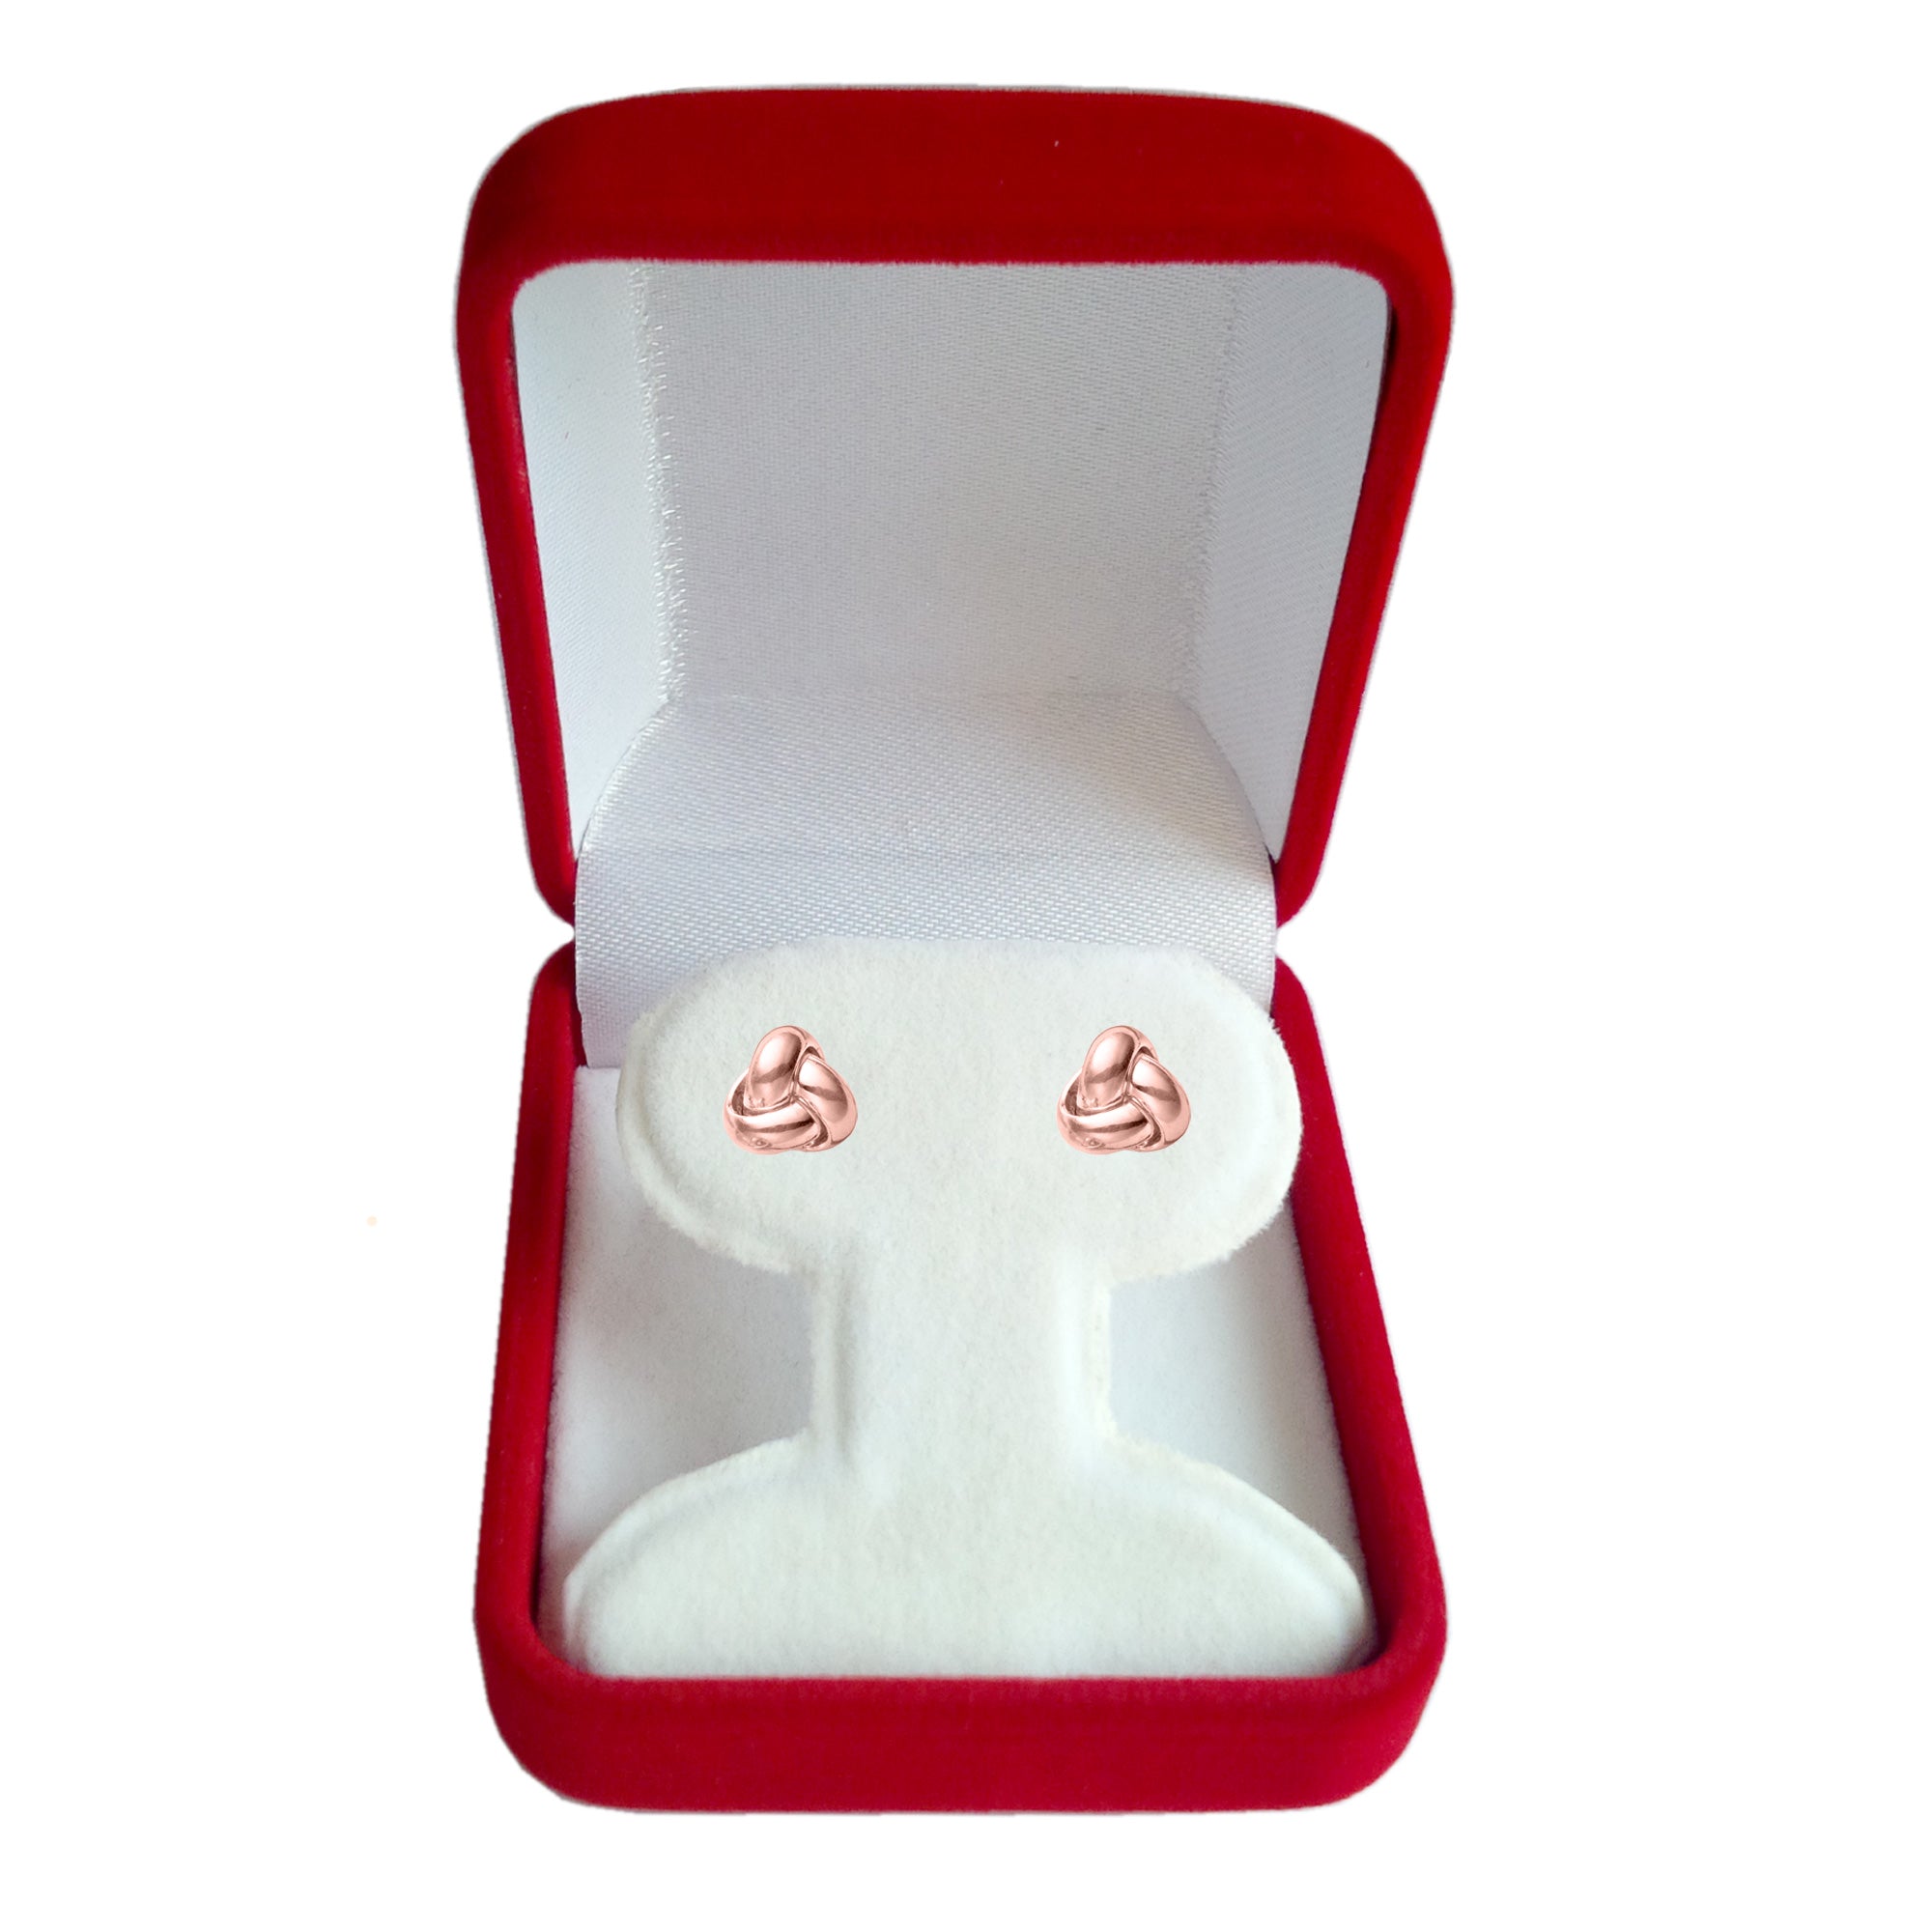 14k Gold Love Knot Stud Earrings, 6mm fine designer jewelry for men and women